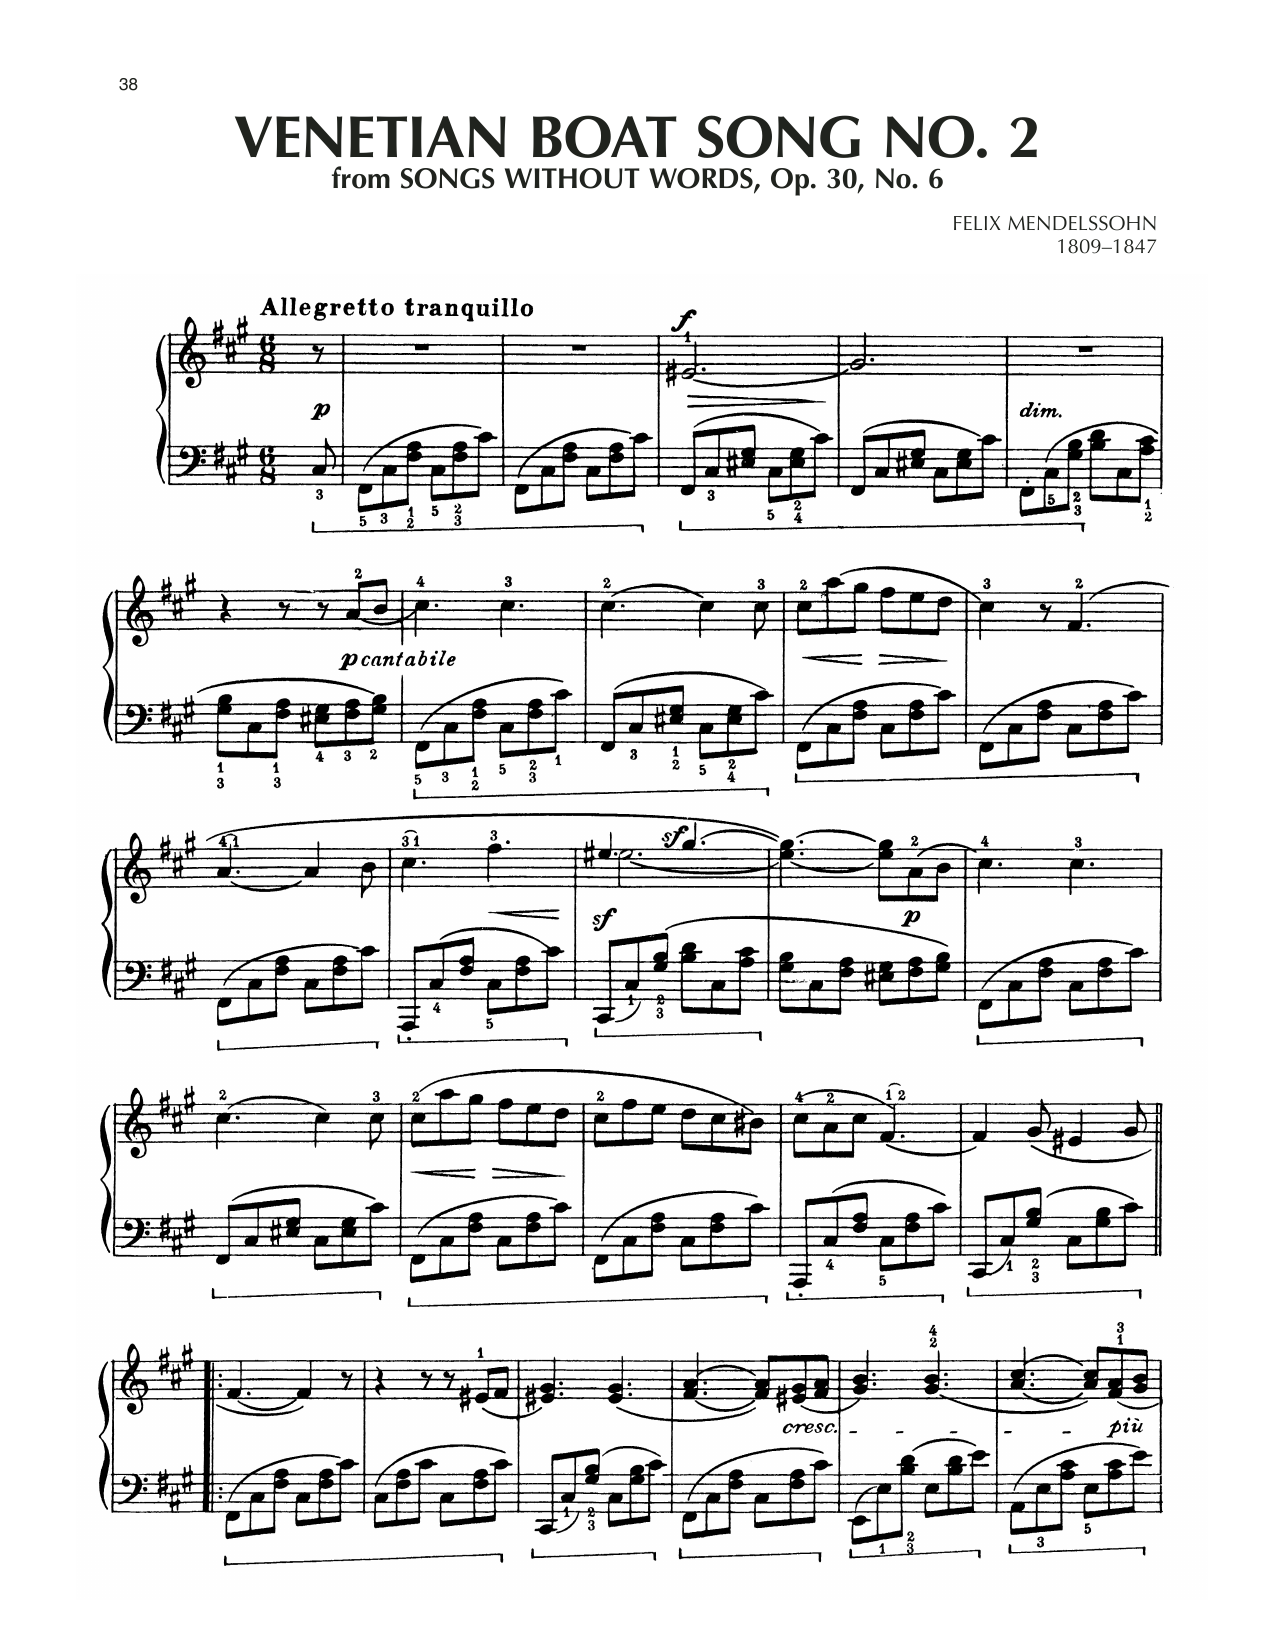 Felix Mendelssohn Venetian Boat Song, Op. 30, No. 6 Sheet Music Notes & Chords for Piano Solo - Download or Print PDF